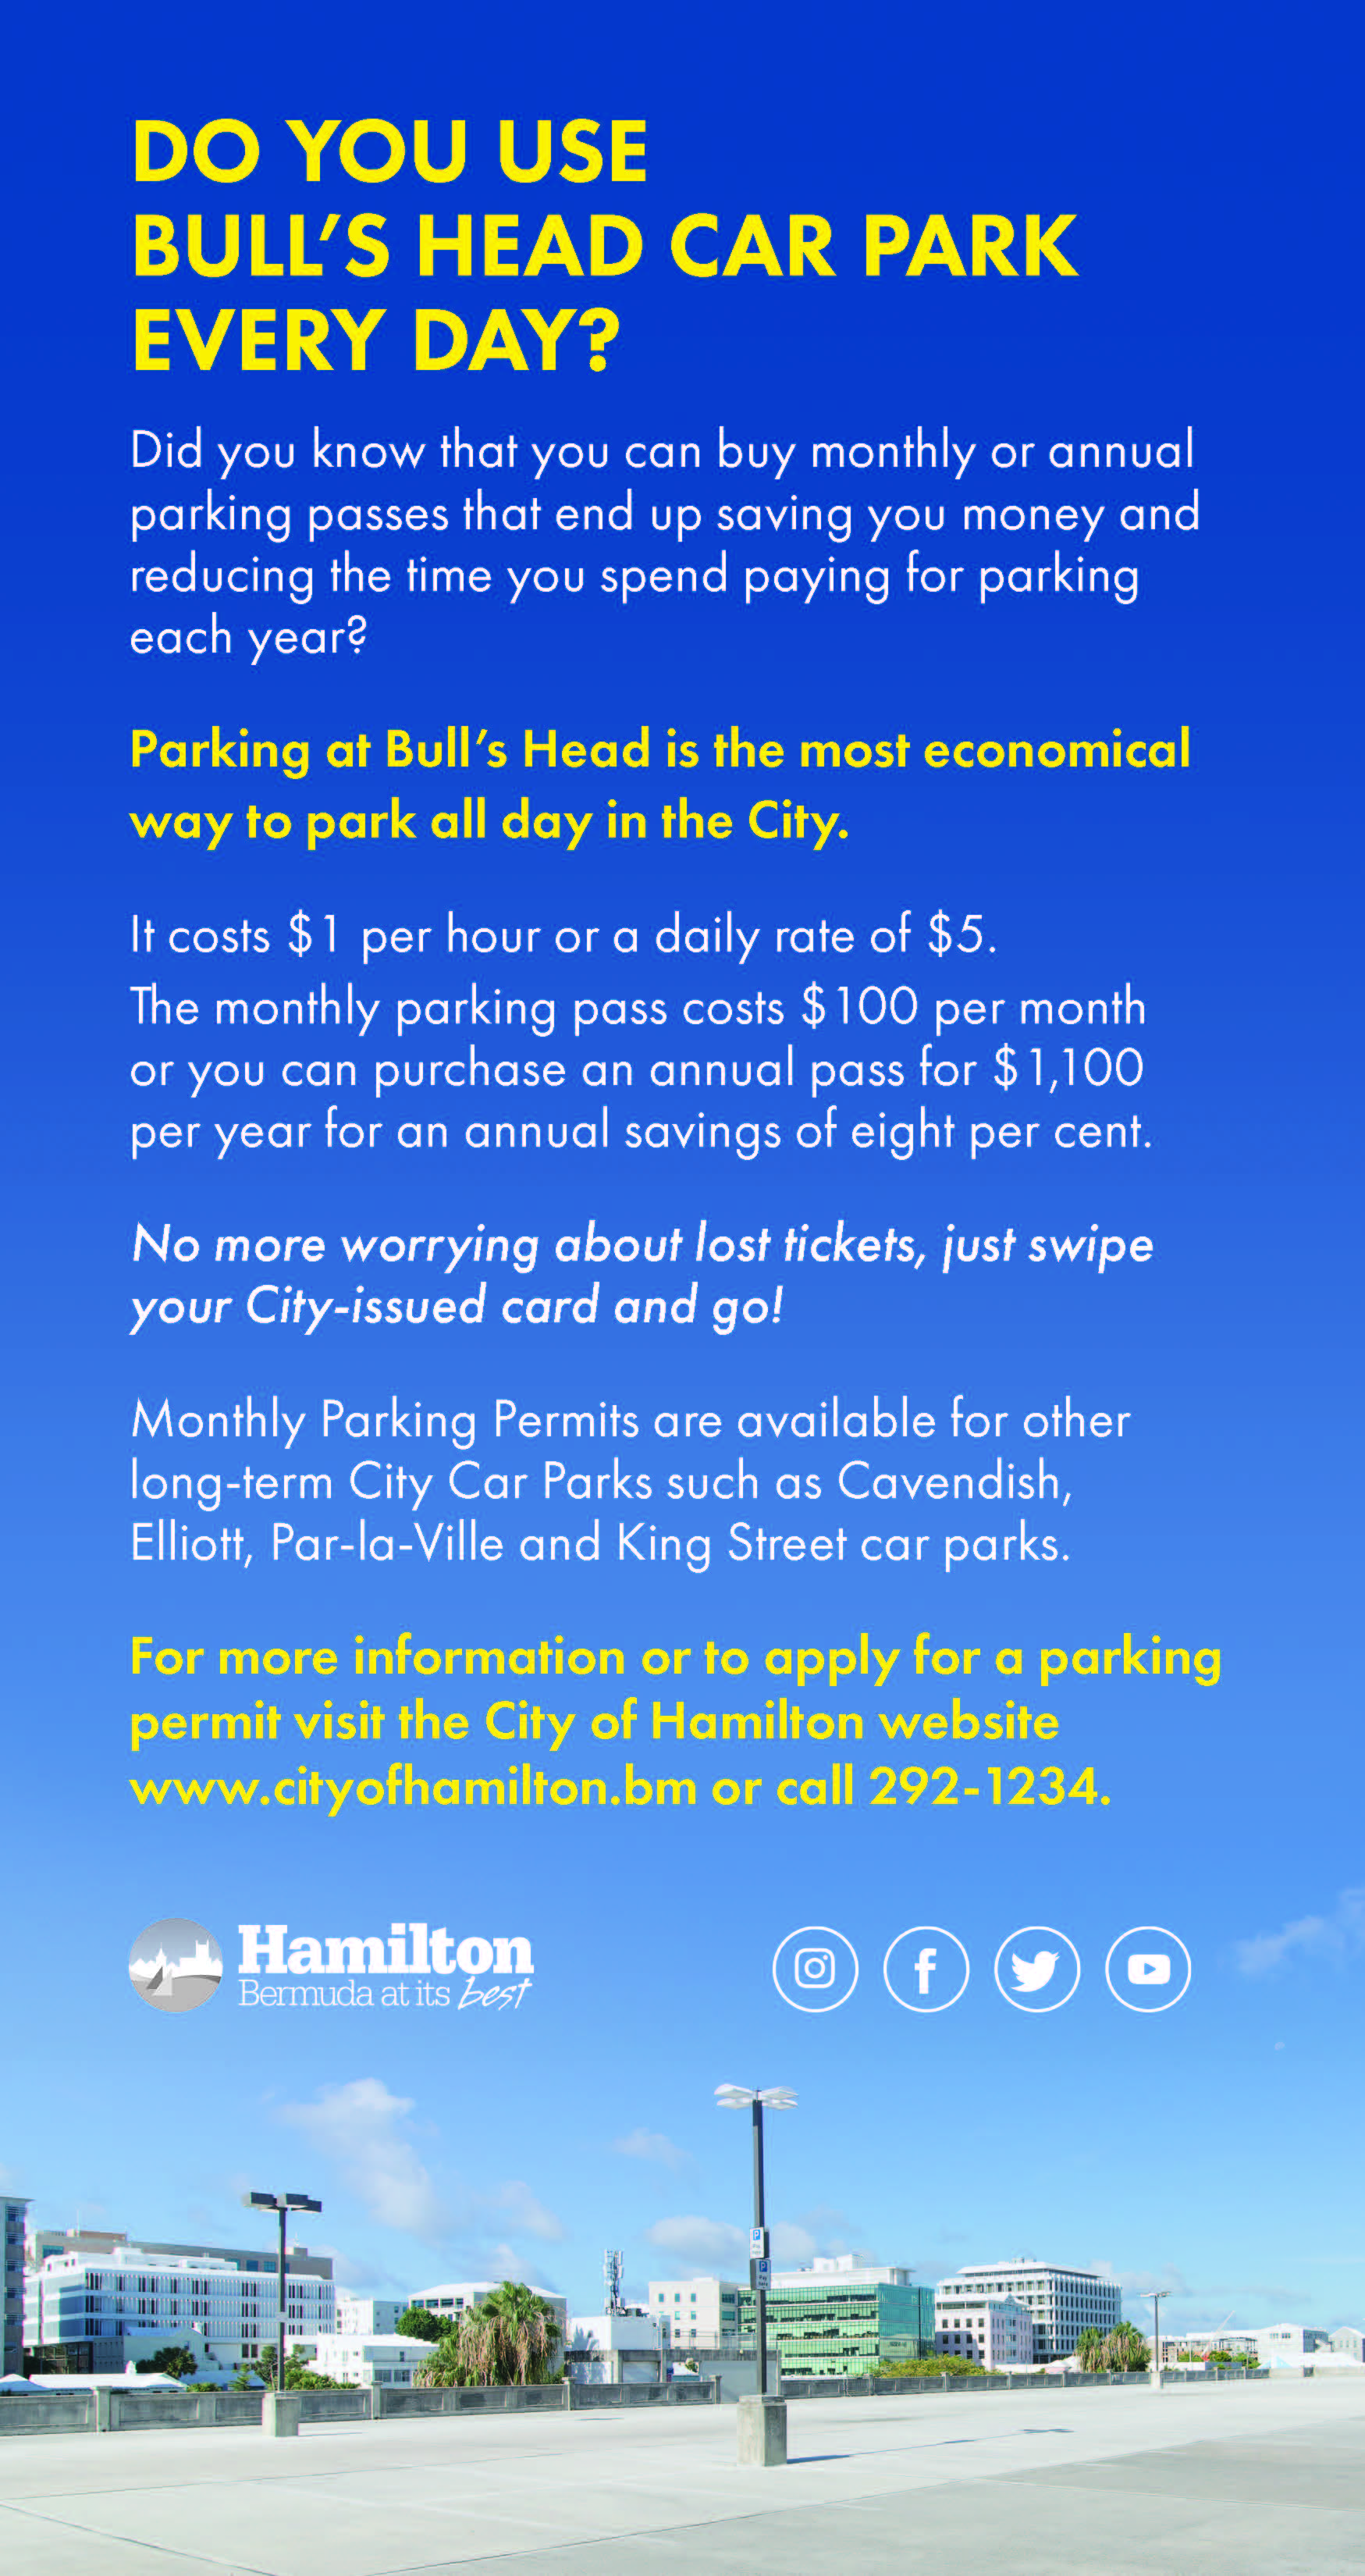 Bull's Head Parking Information